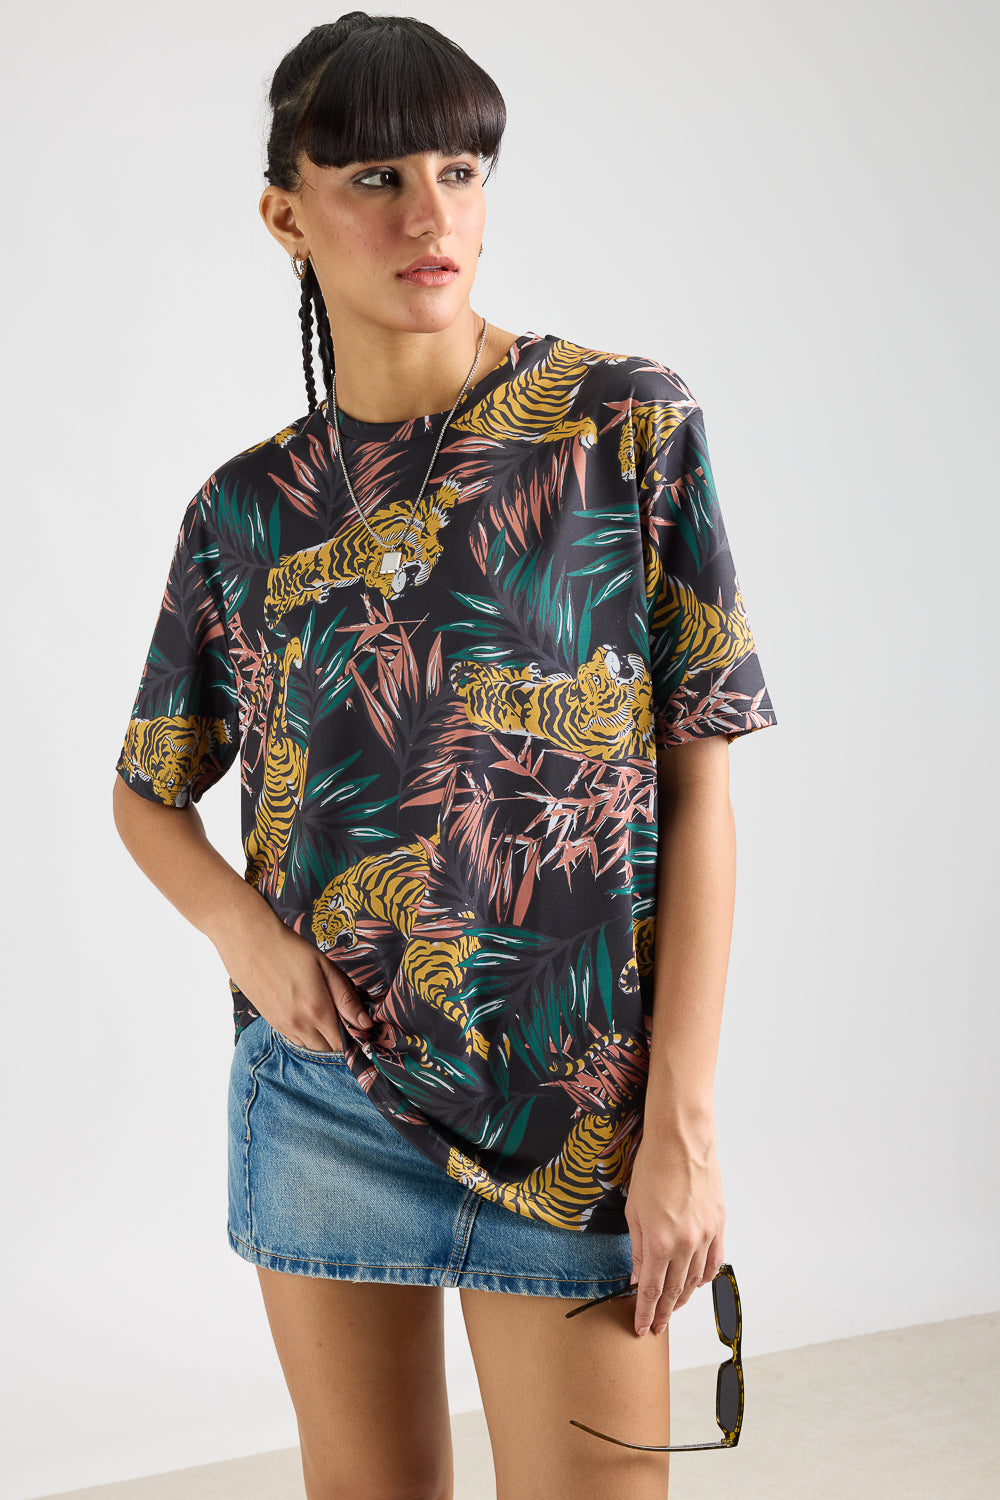 Printed Women's T-Shirt - Urban Jungle